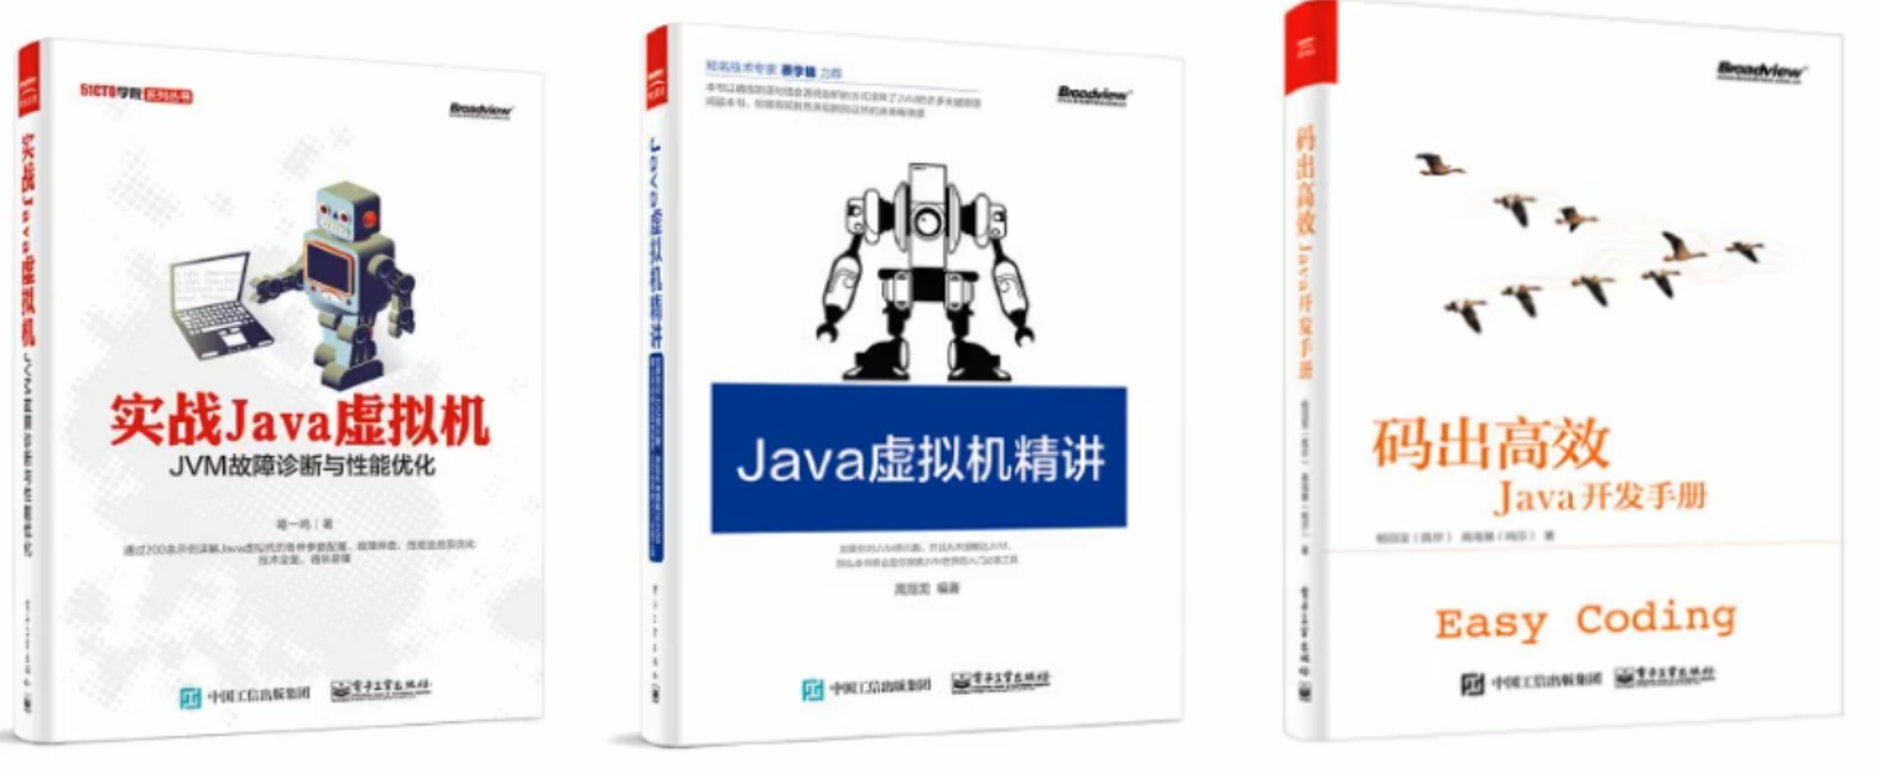 01-JVM与Java体系结构 - 图6